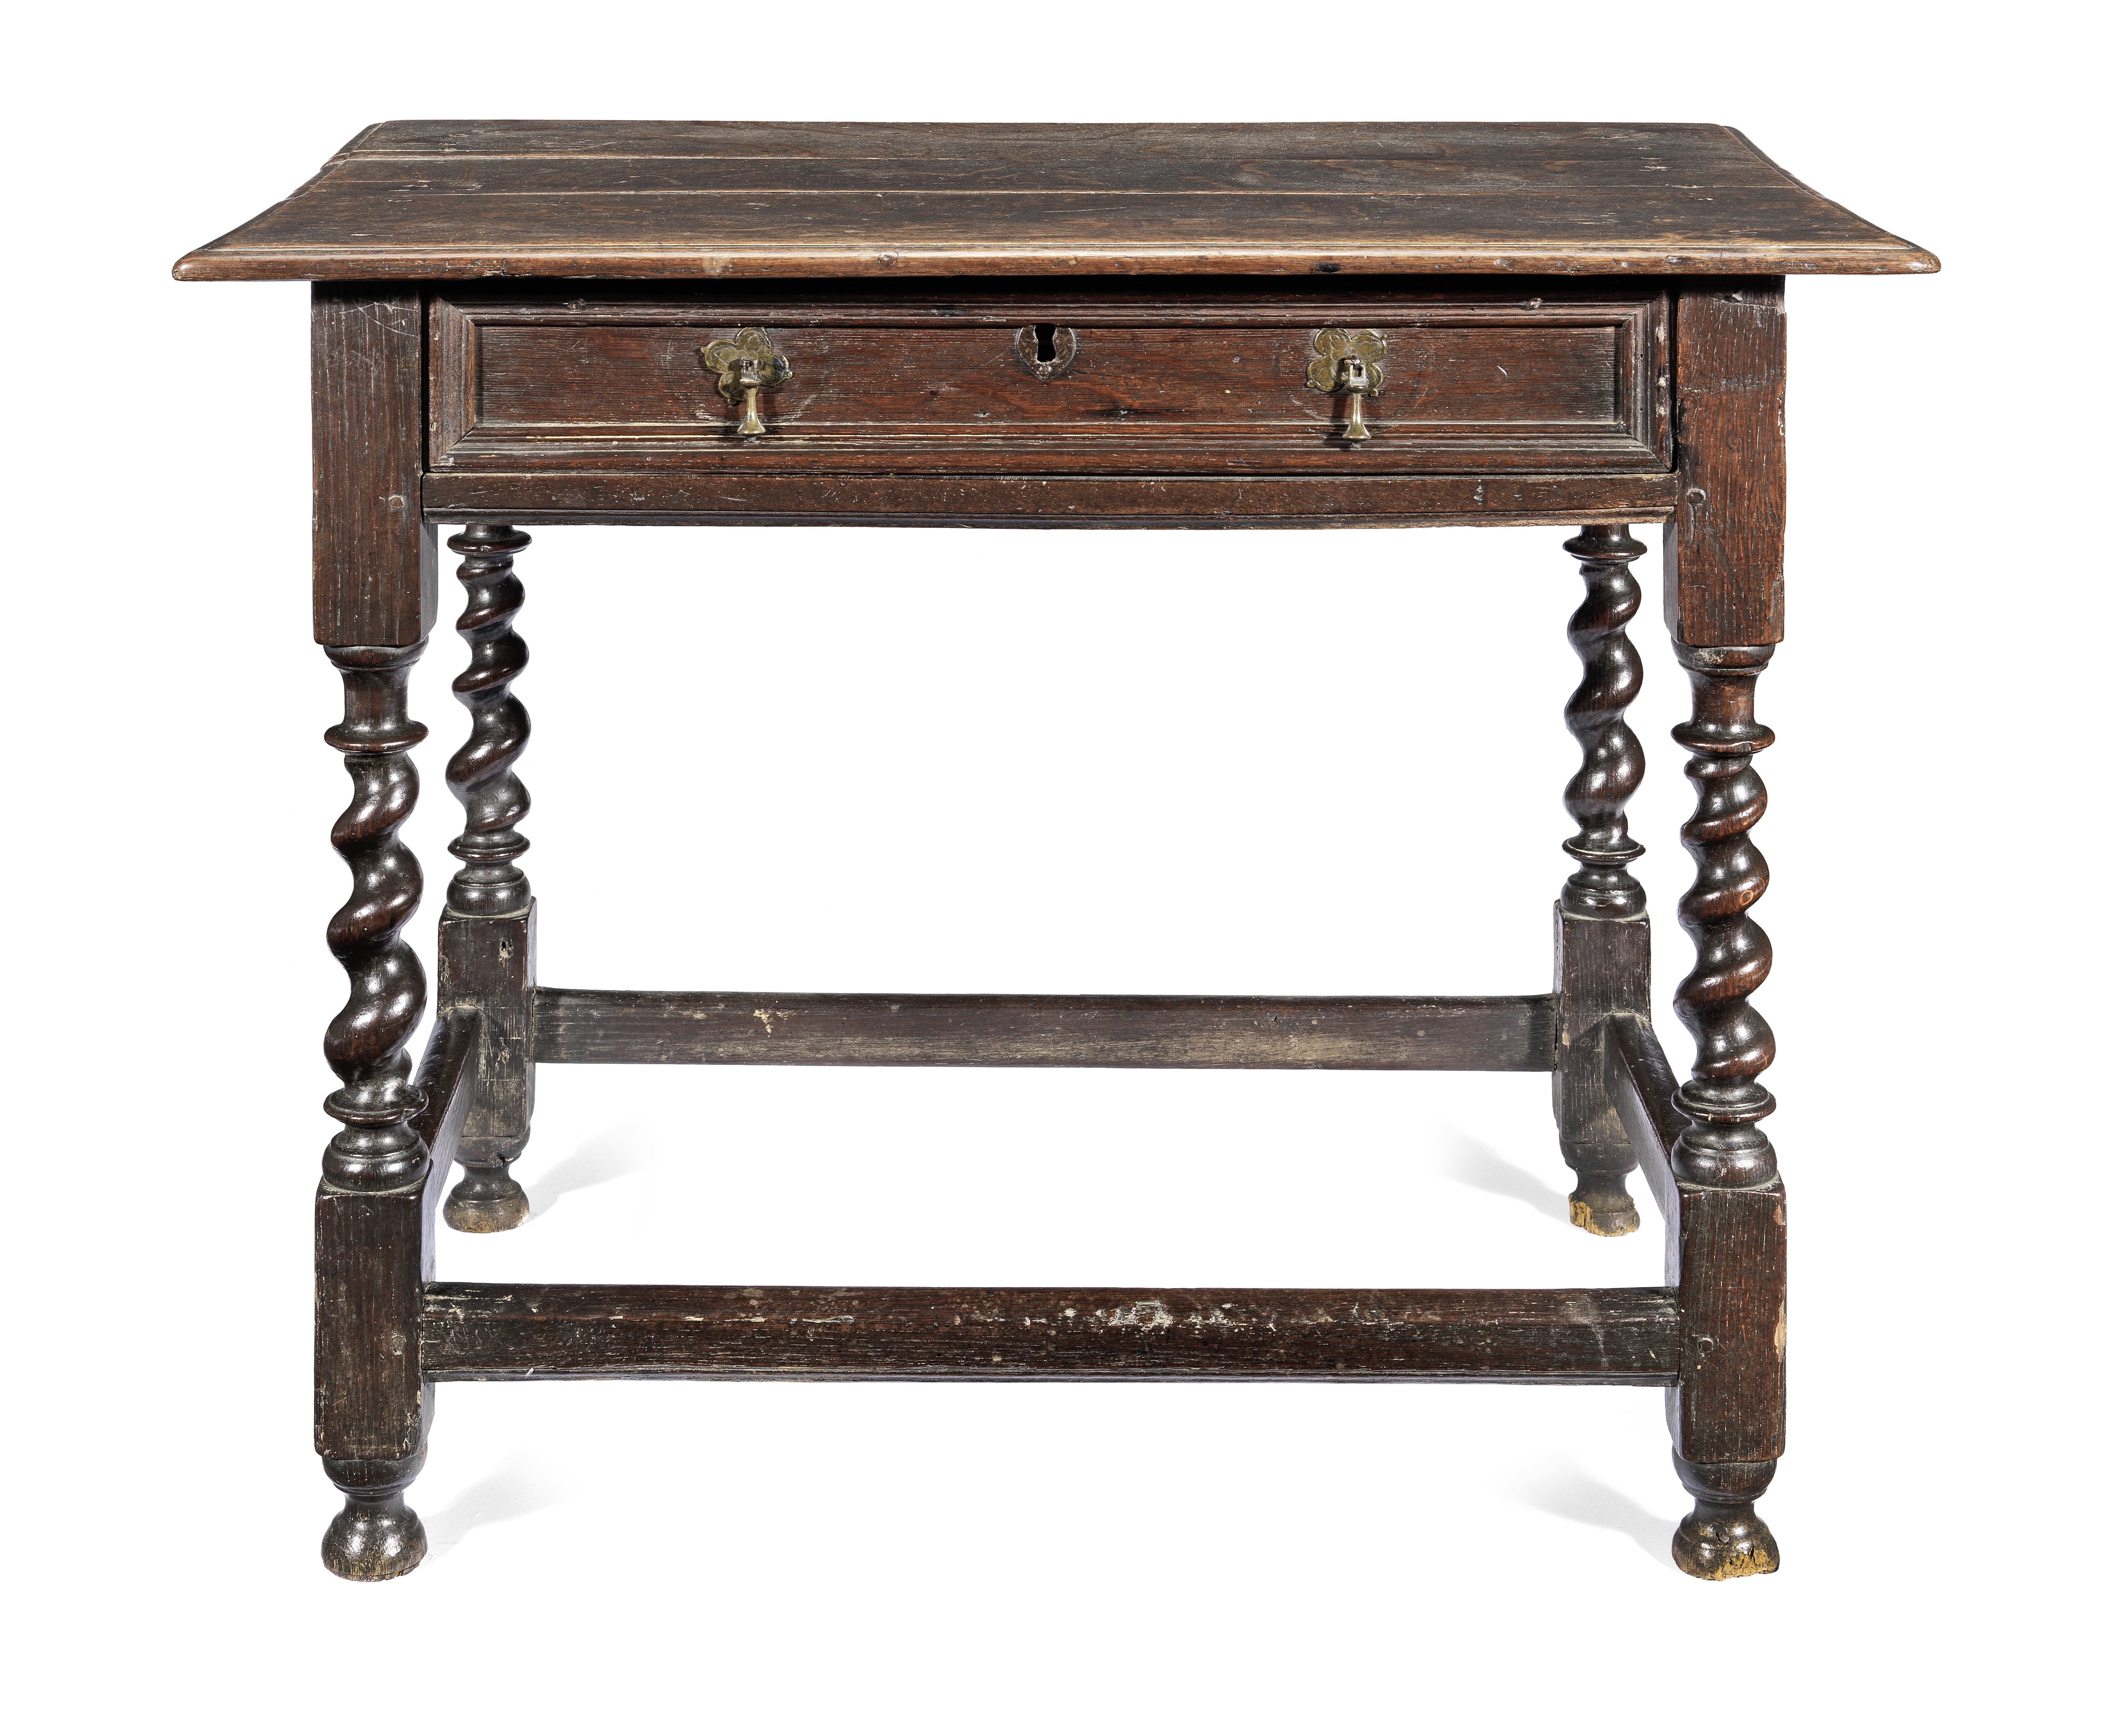 A Charles II joined oak side table, circa 1670